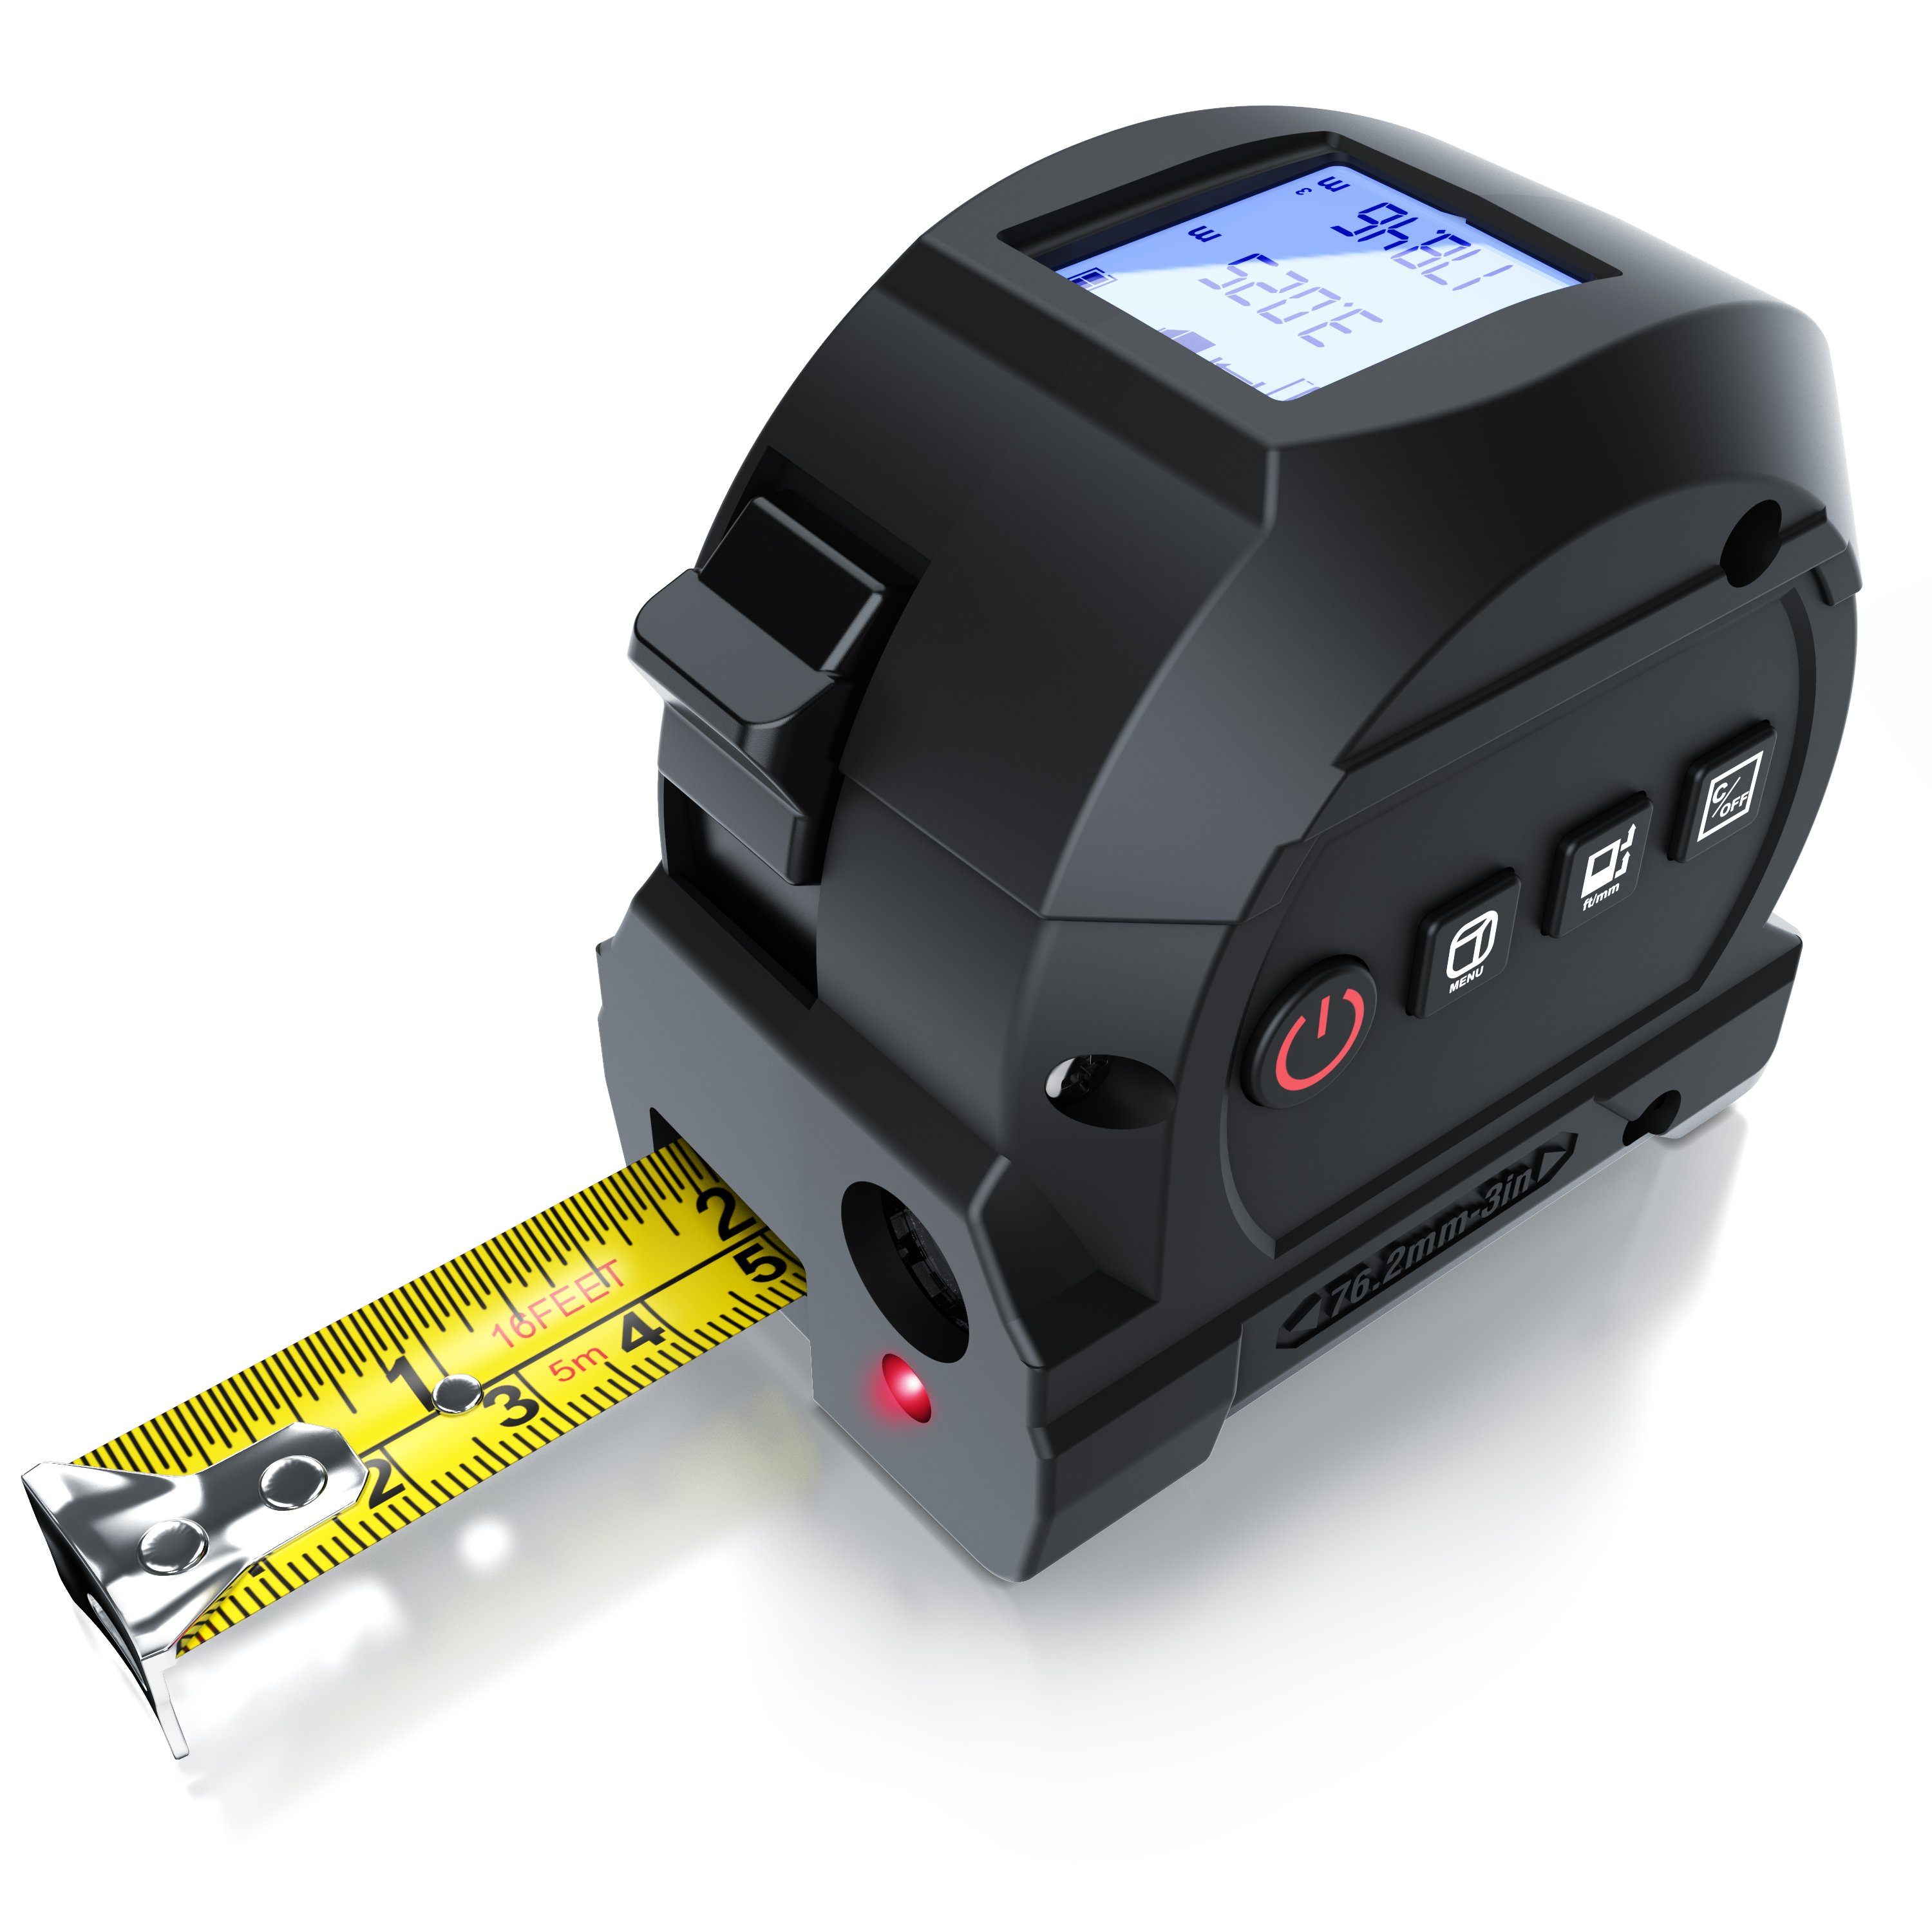 Brandson Lasermessgerät Entfernungsmessgerät mit 5 m Maßband 2 in 1 – Laser bis 40 m, Digital Далекомір, mini Distanzmessgerät